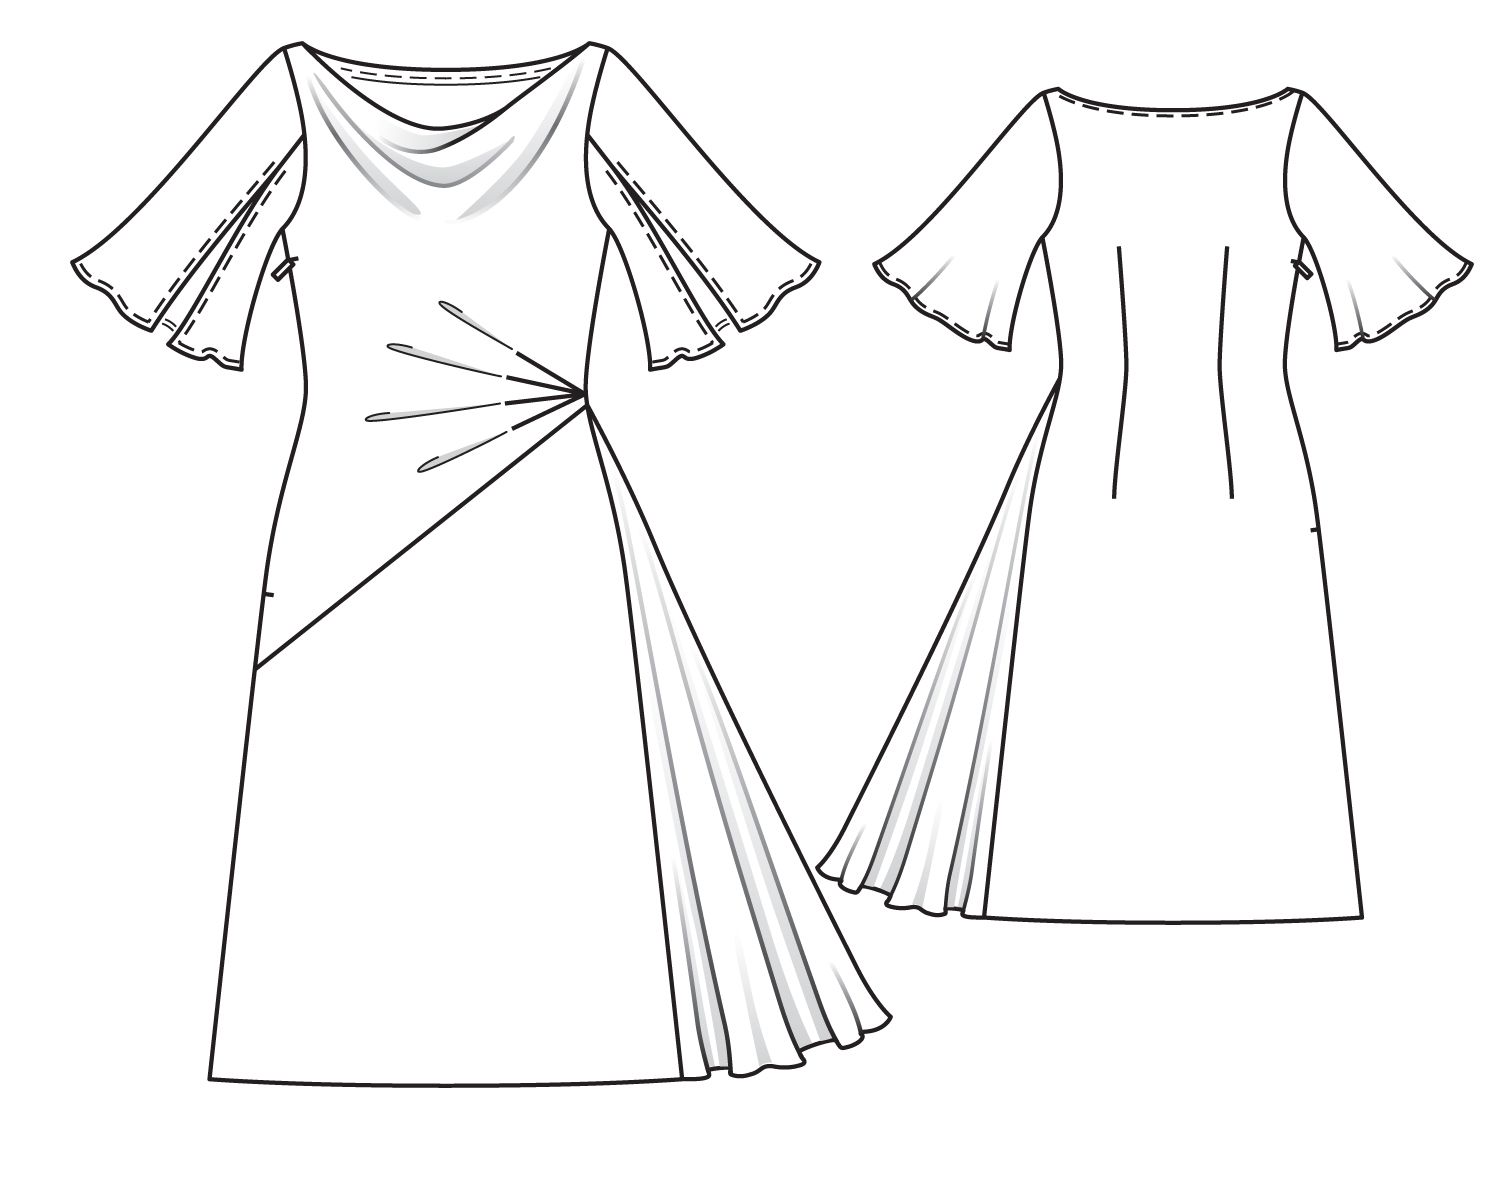 Шаблон платья для шитья